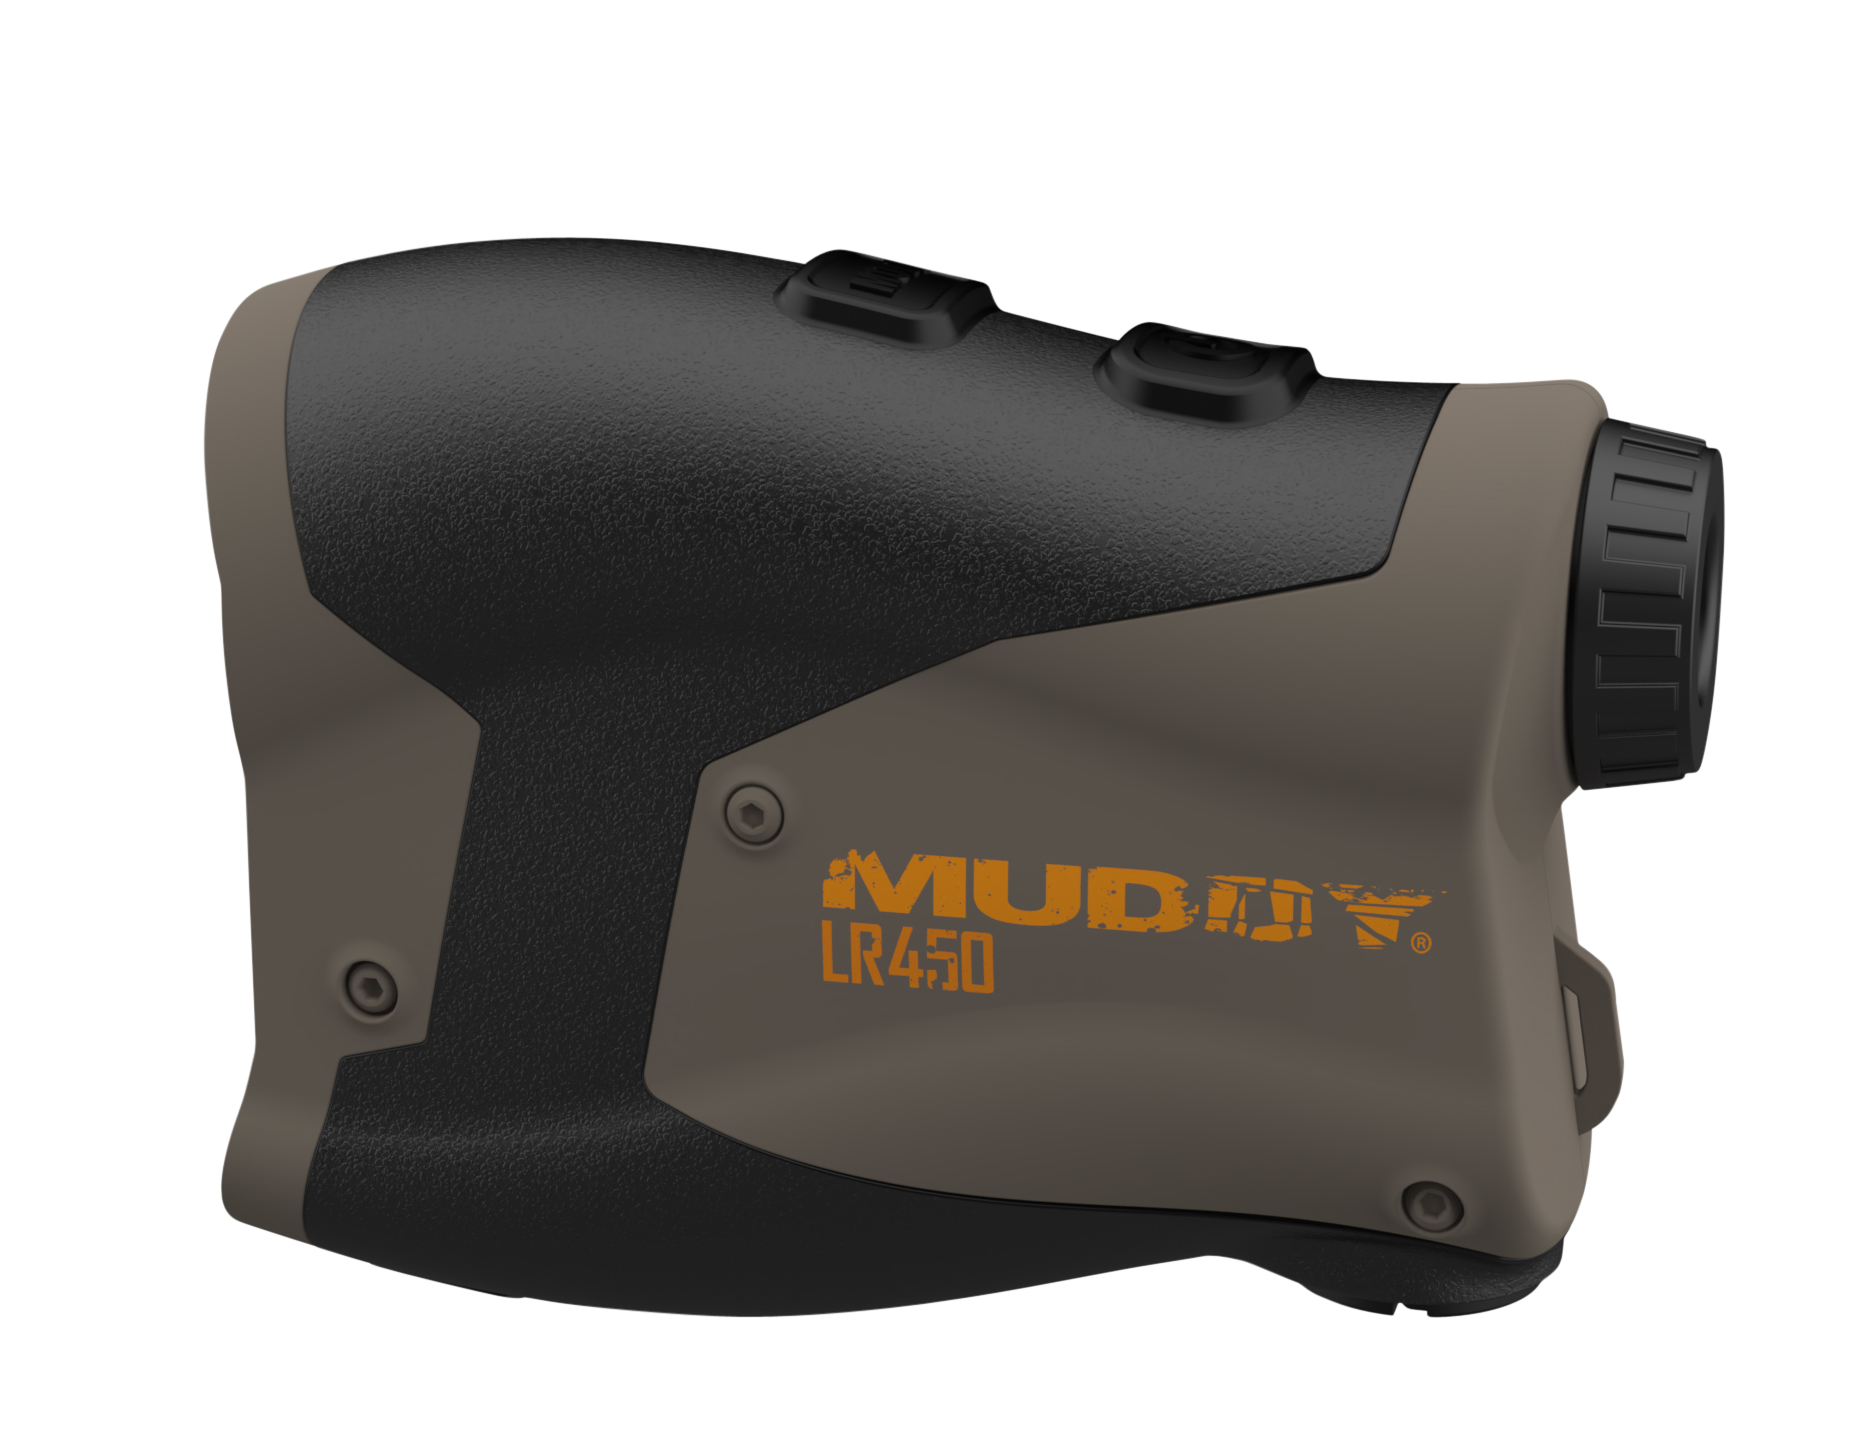 Muddy MUD-LR450 LR450 Black Rubber Armor 7x 450 yds Max Distance